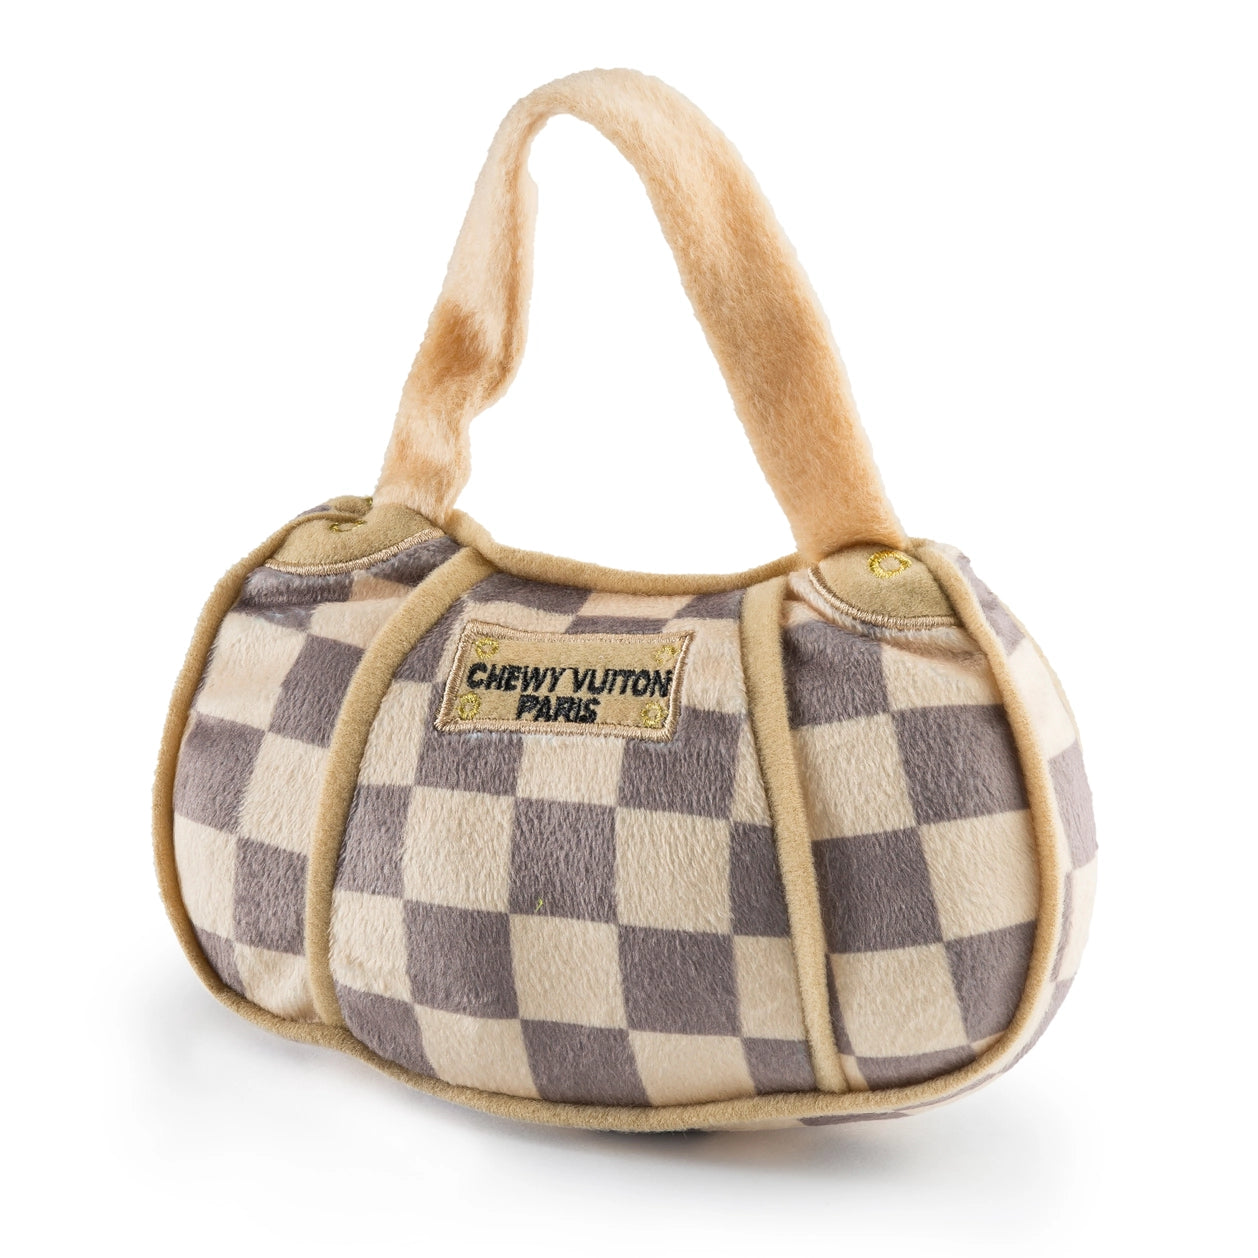 Haute Diggity Dog Checker Chewy Vuiton Handbag Squeaker Dog Toy. Large